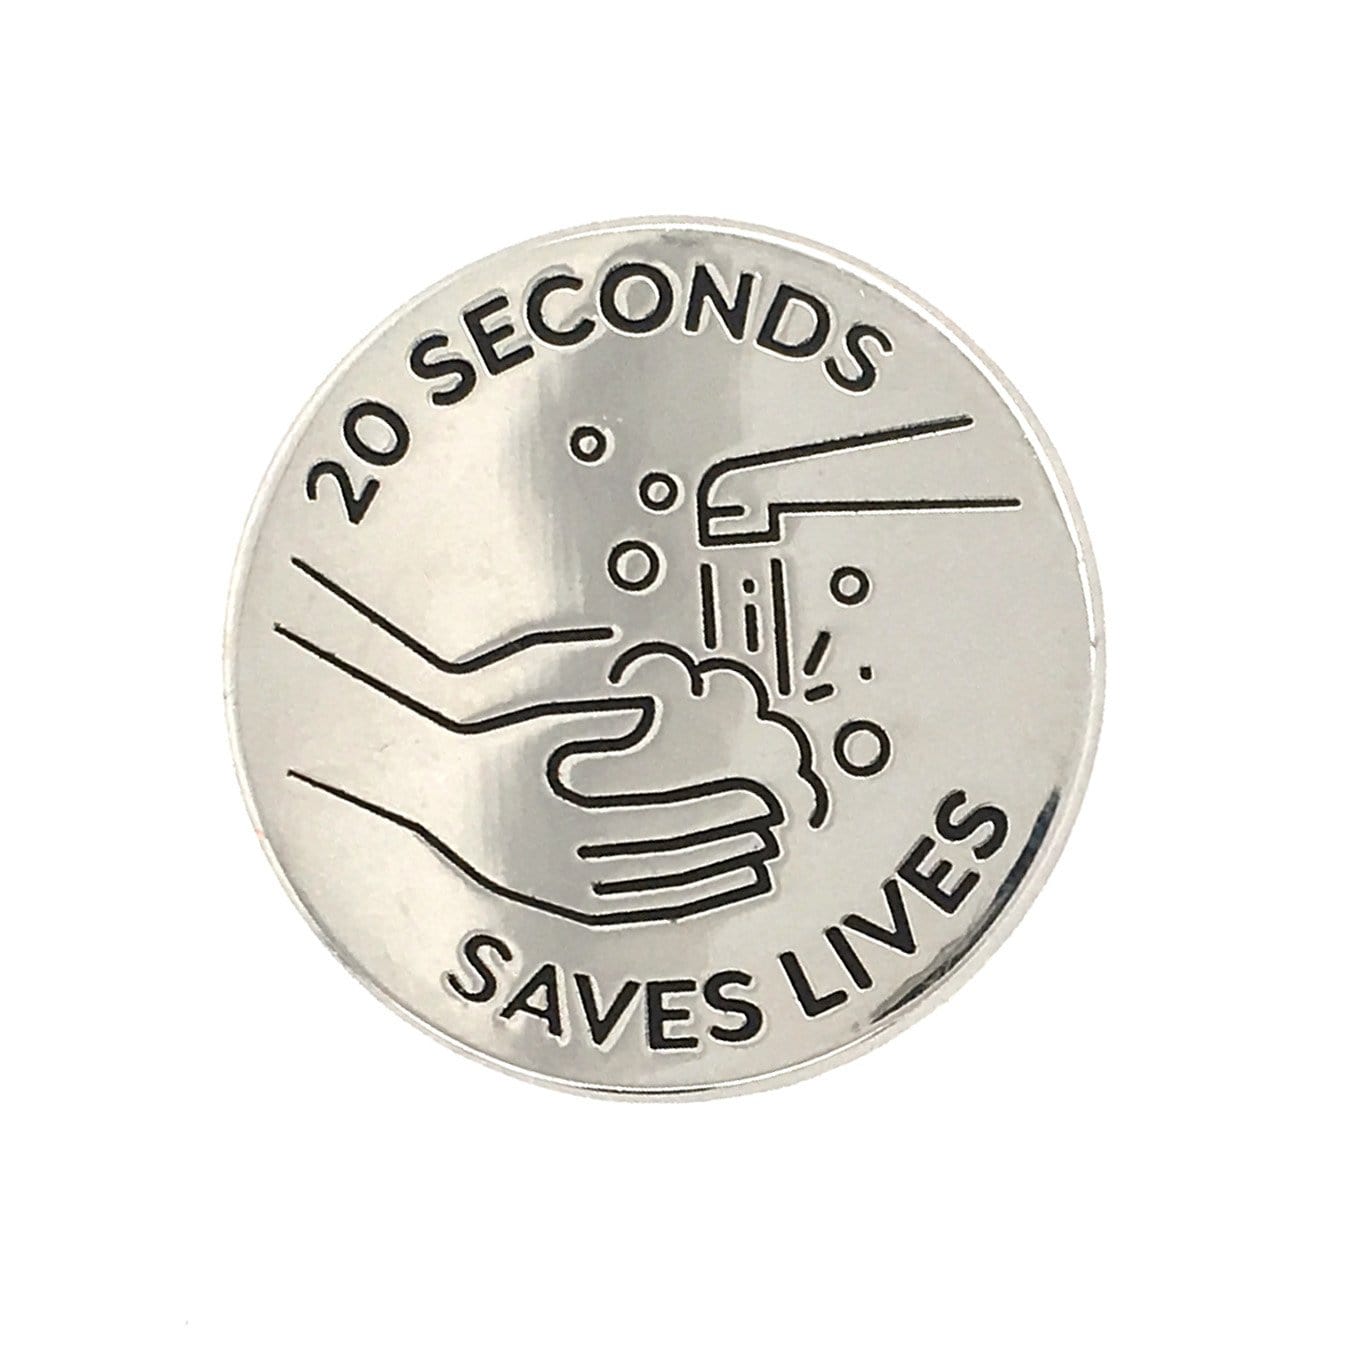 20 Seconds Saves Lives Handwashing Pin